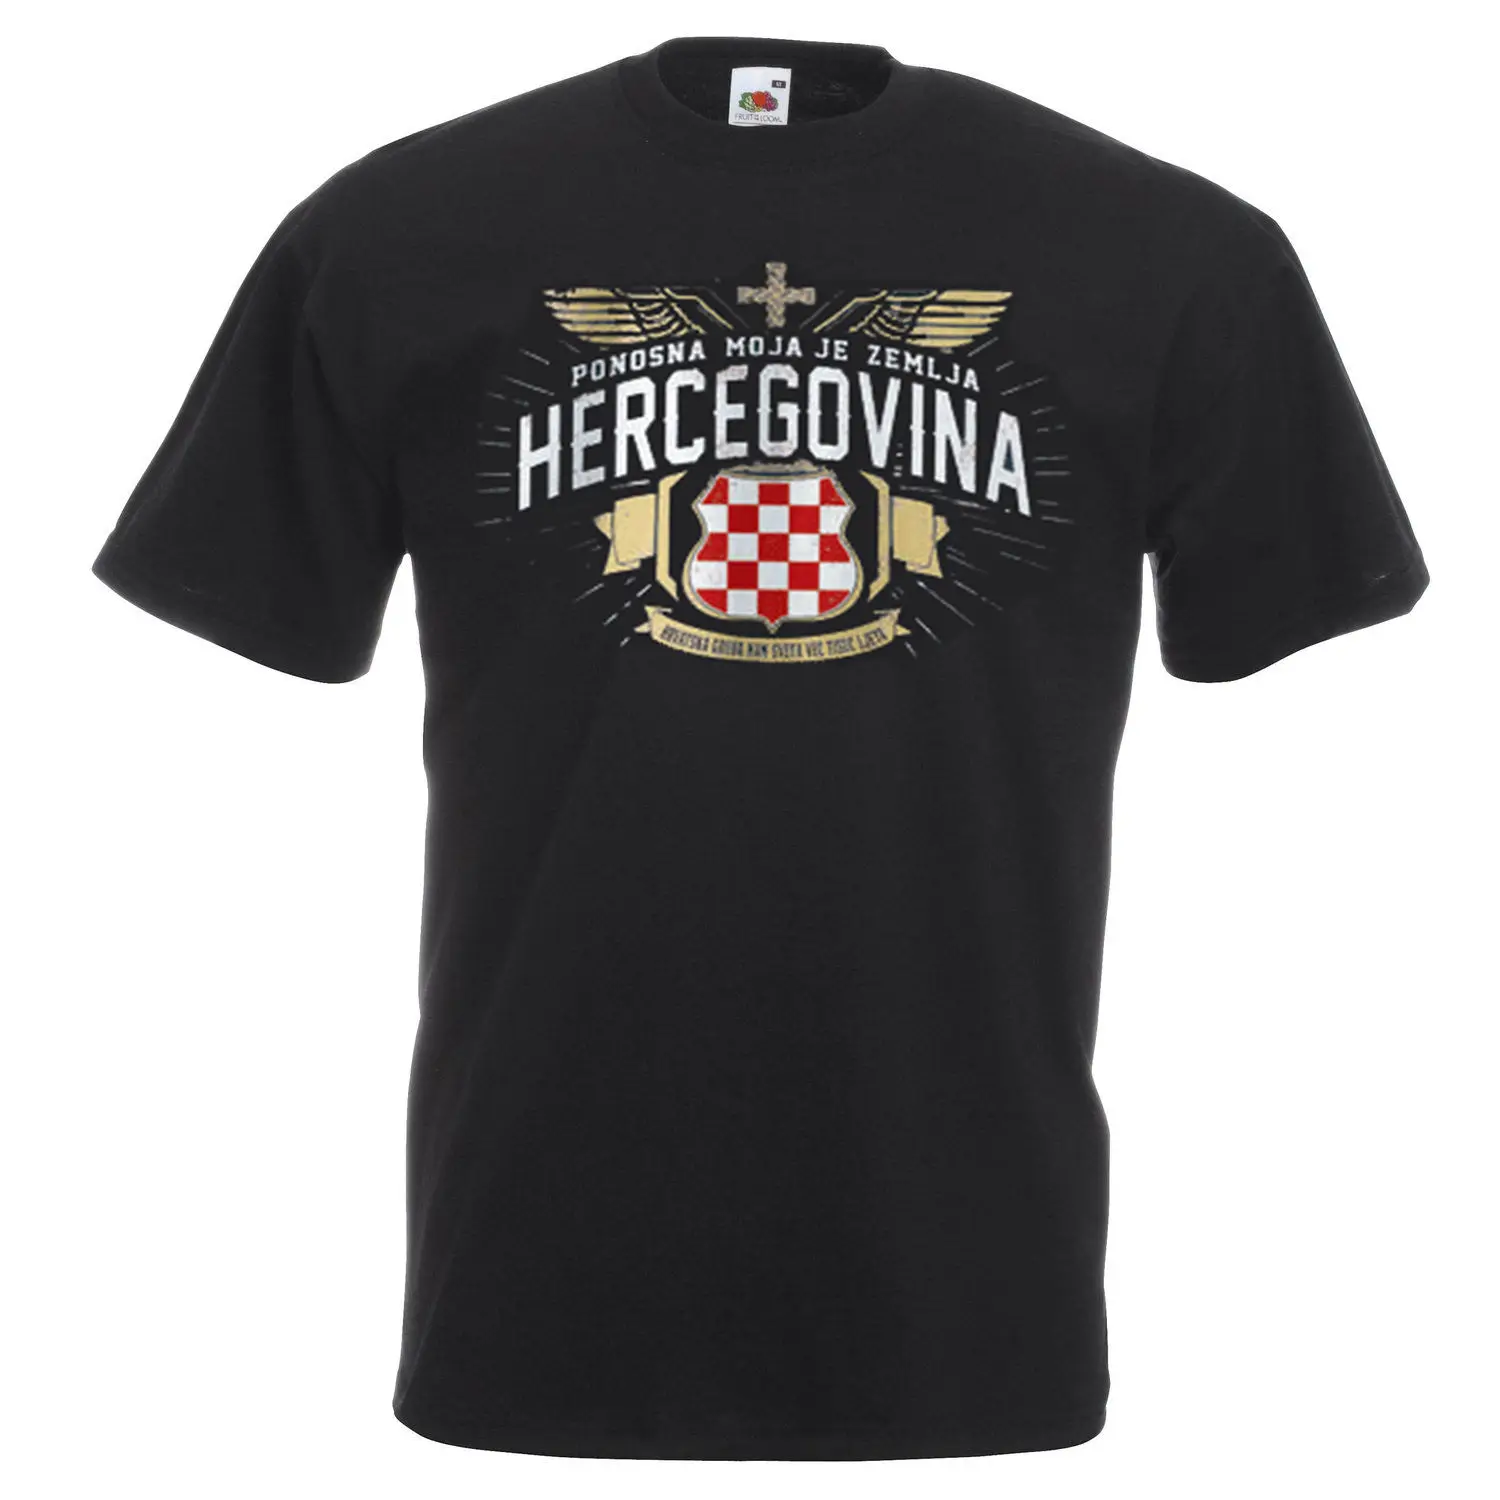 

Hot Casual Short Sleeve for Men Clothing Summer HERCEGOVINA T-SHIRT Hrvatska BiH Croat CROATIA Black Majica Tee New T-Shirt